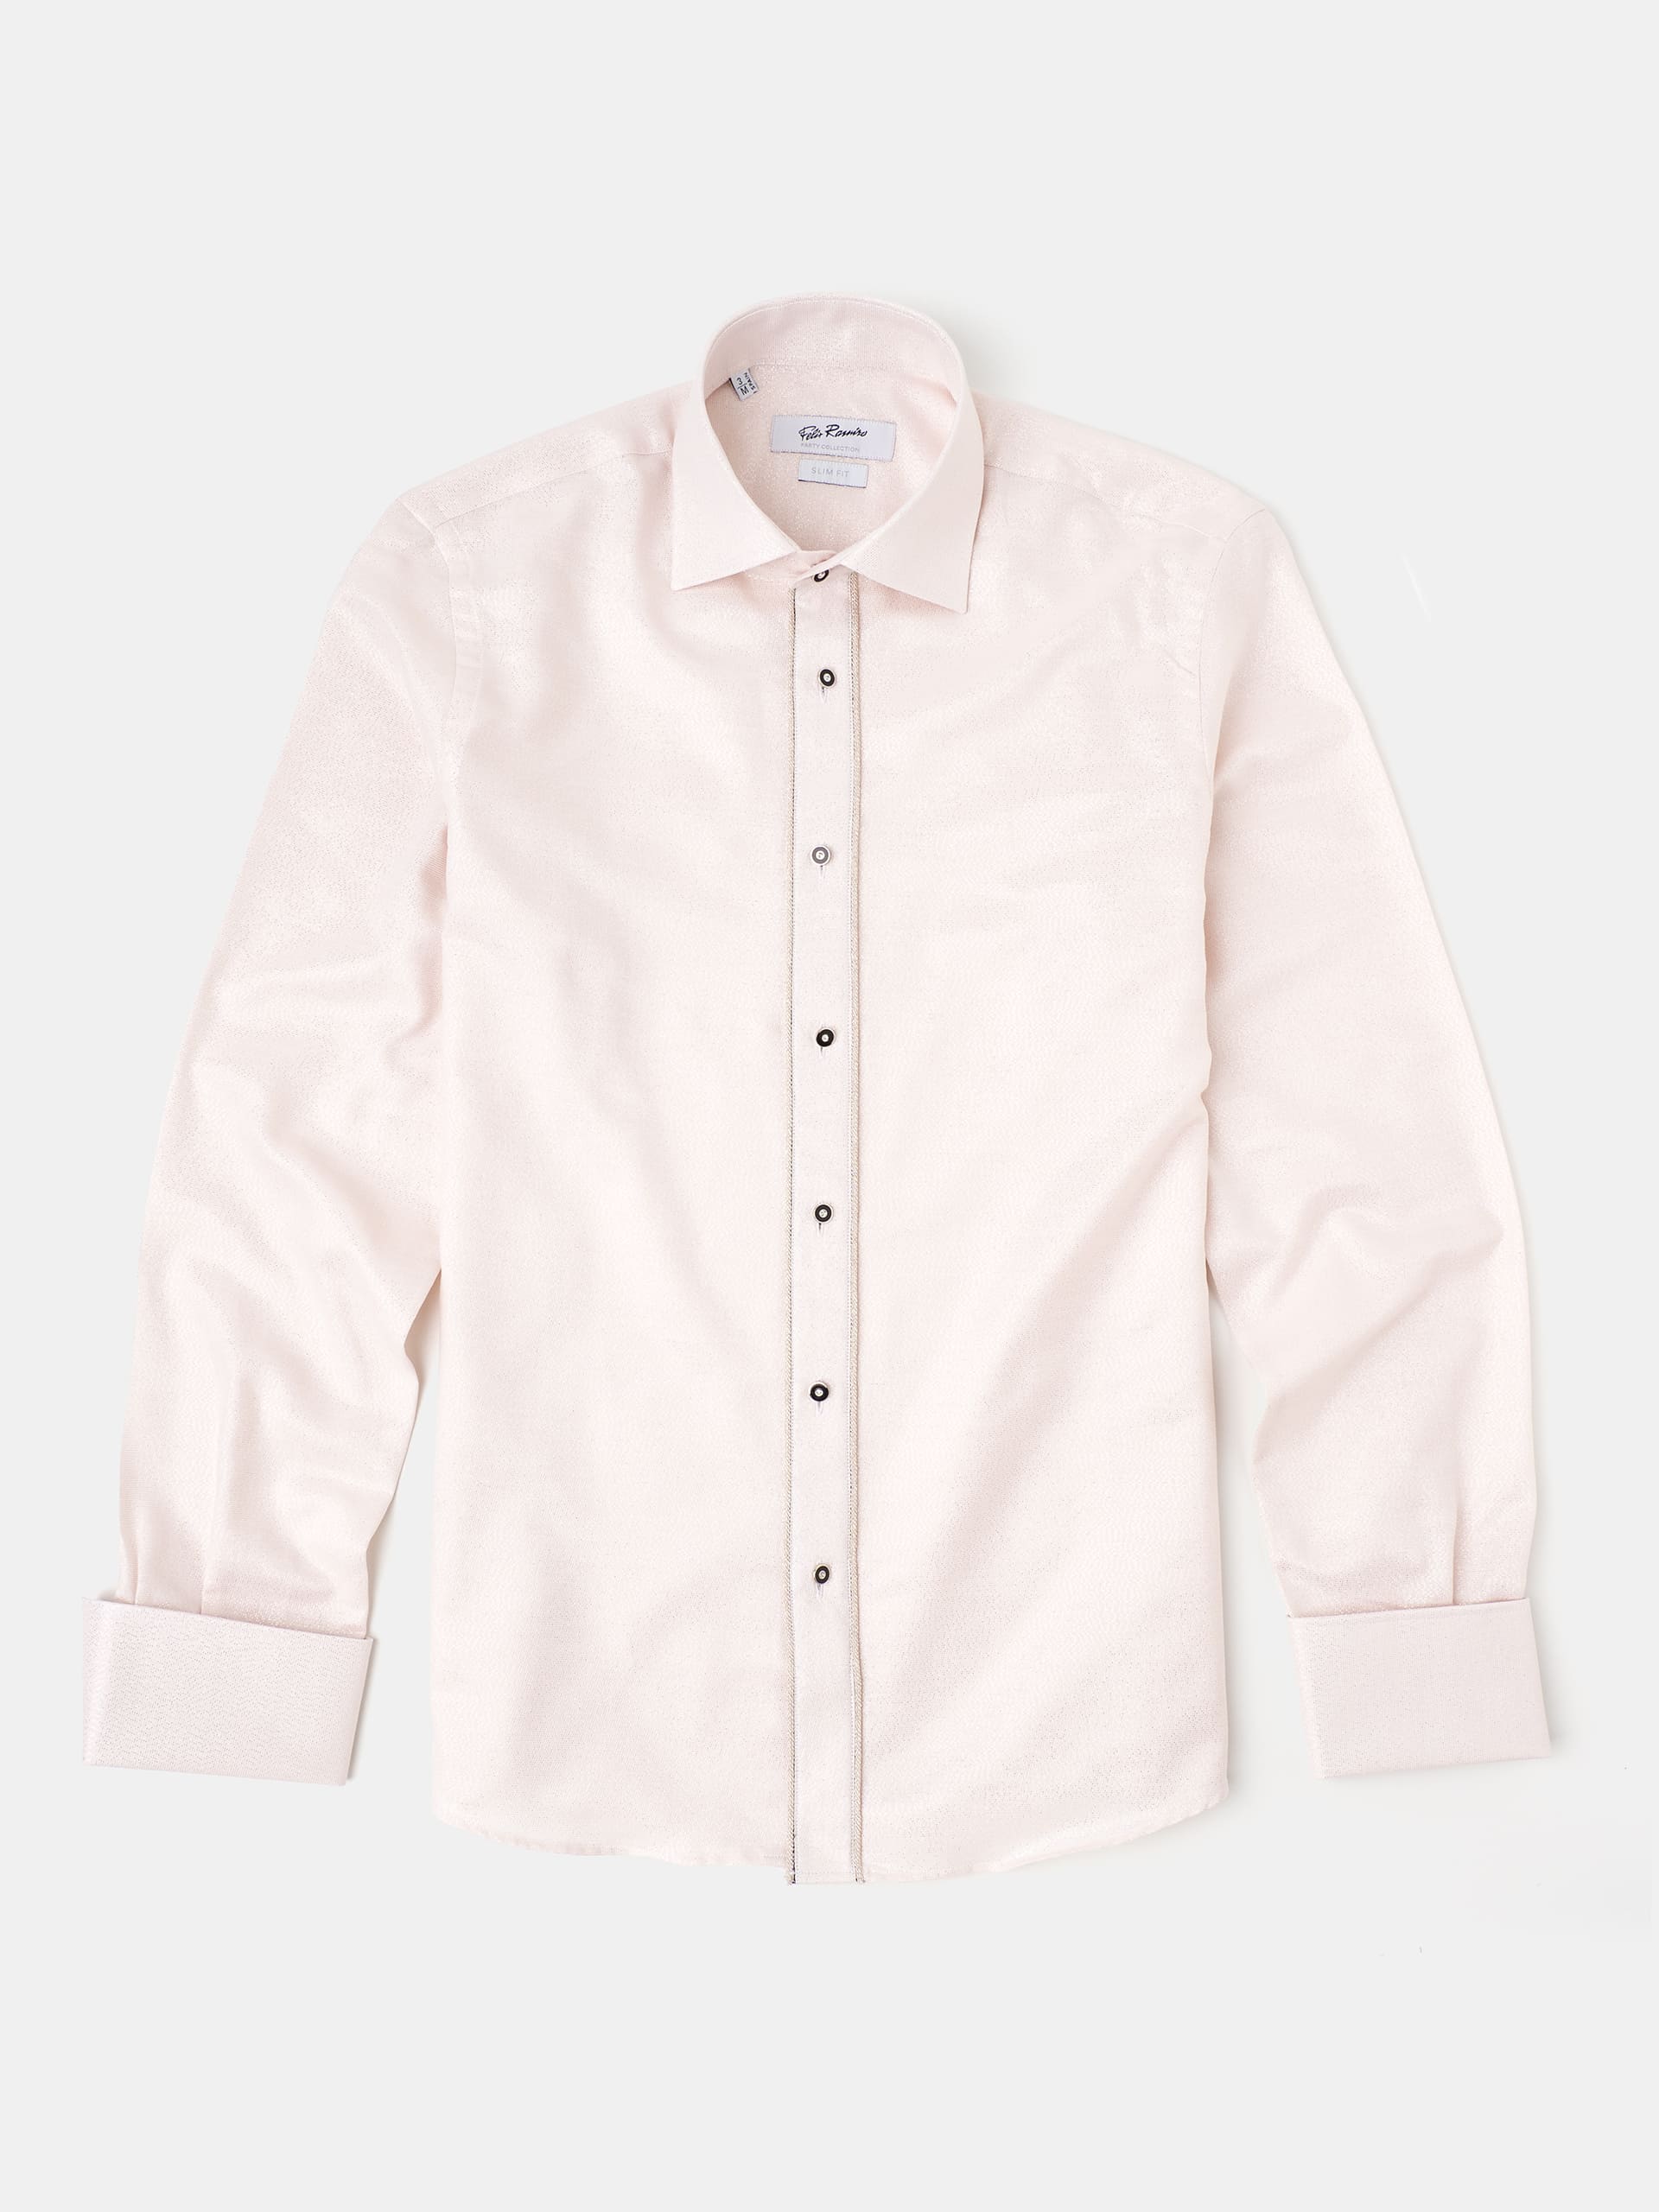 camisa-fiesta-algodon-y-lurex-blanca-1